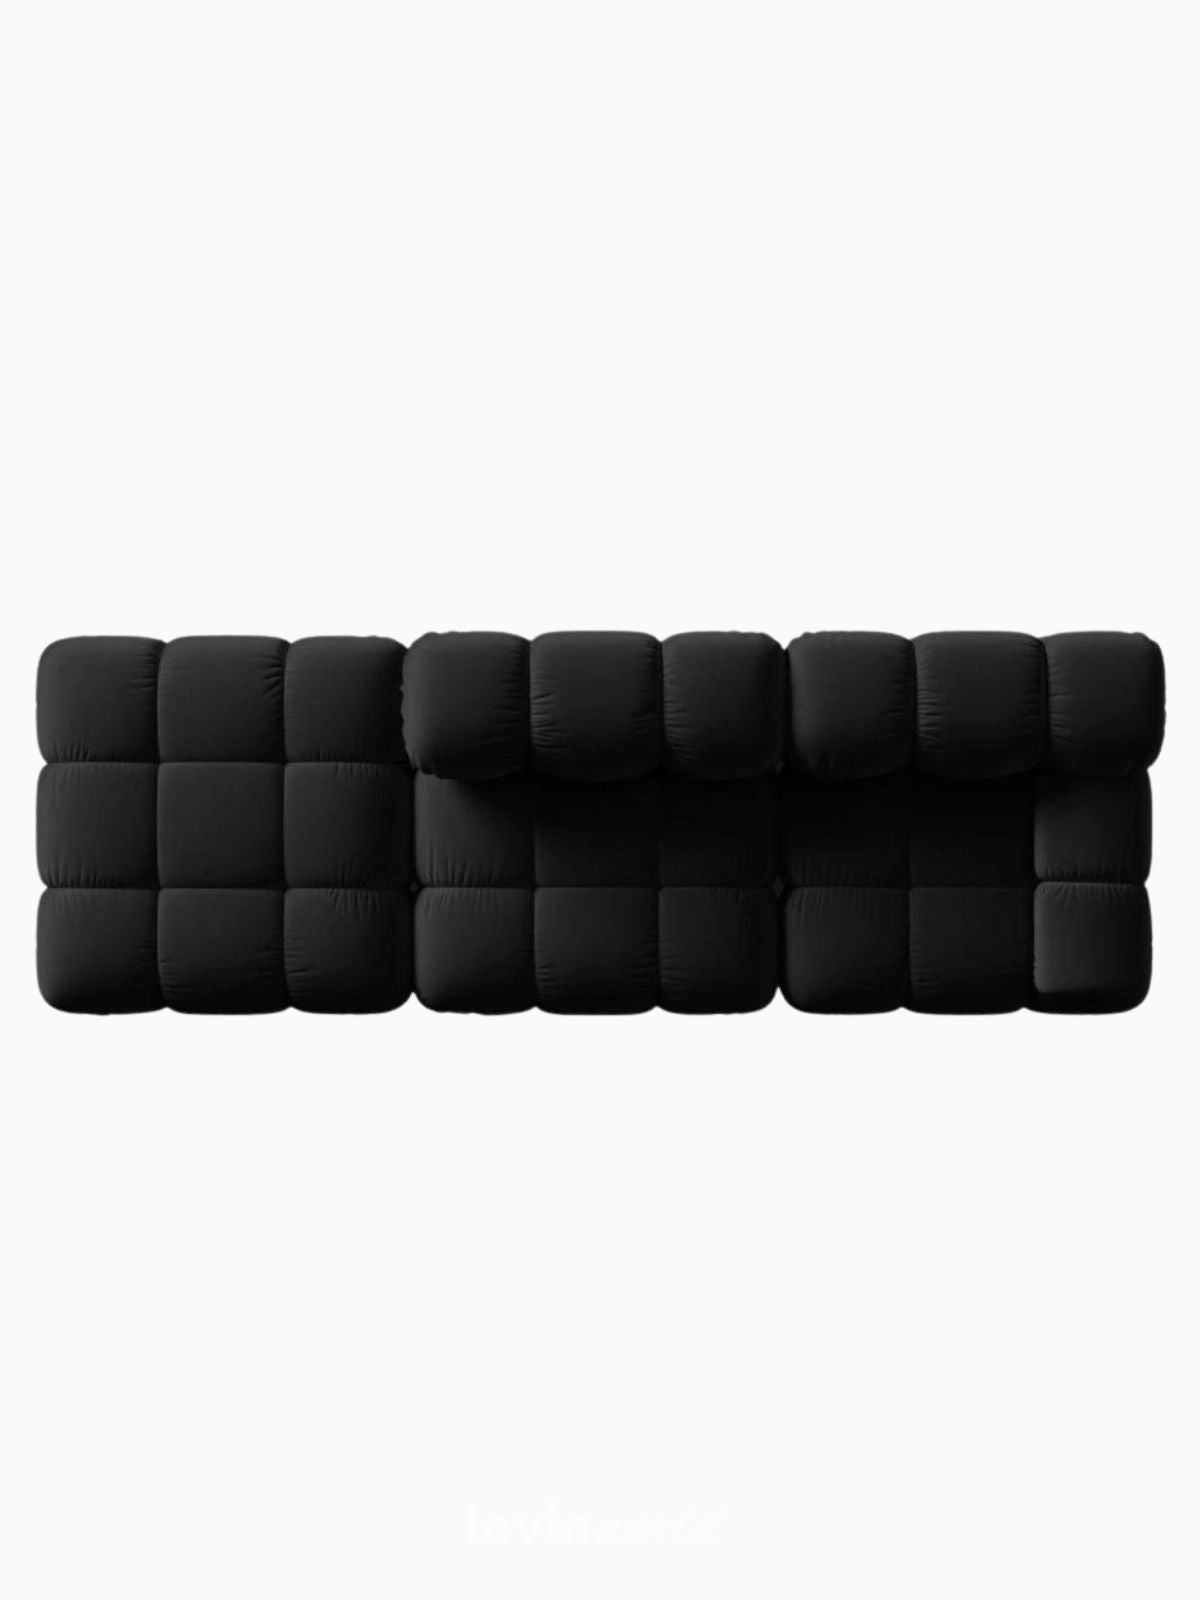 Divano modulare 4 sedute Bellis in velluto, colore nero-4